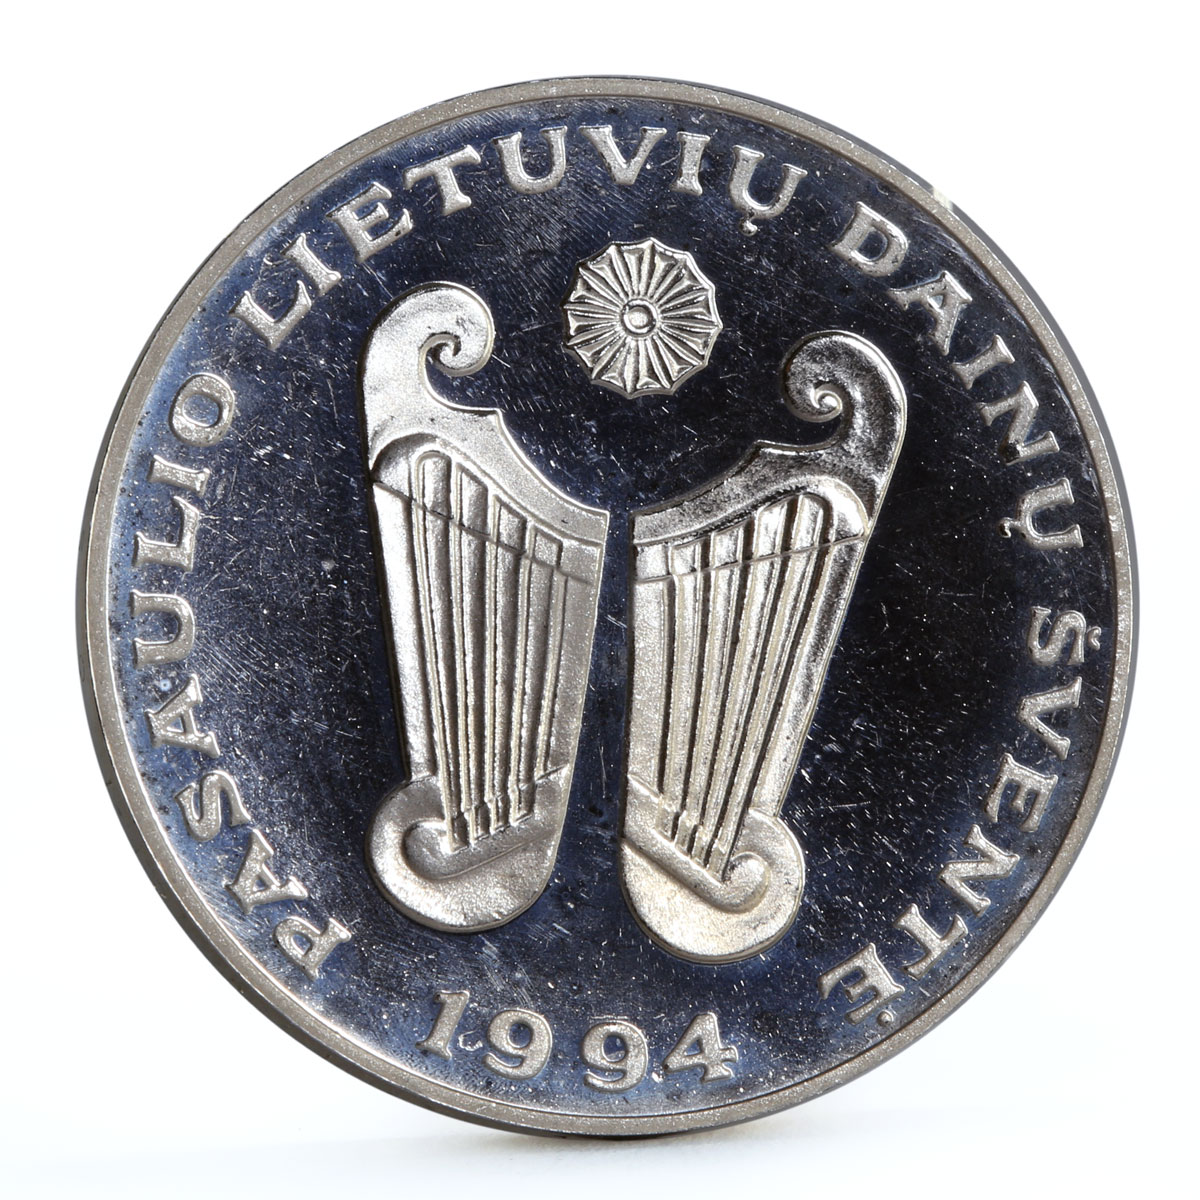 Lithuania 10 litu International Song Festival Kankles Instrument CuNi coin 1994